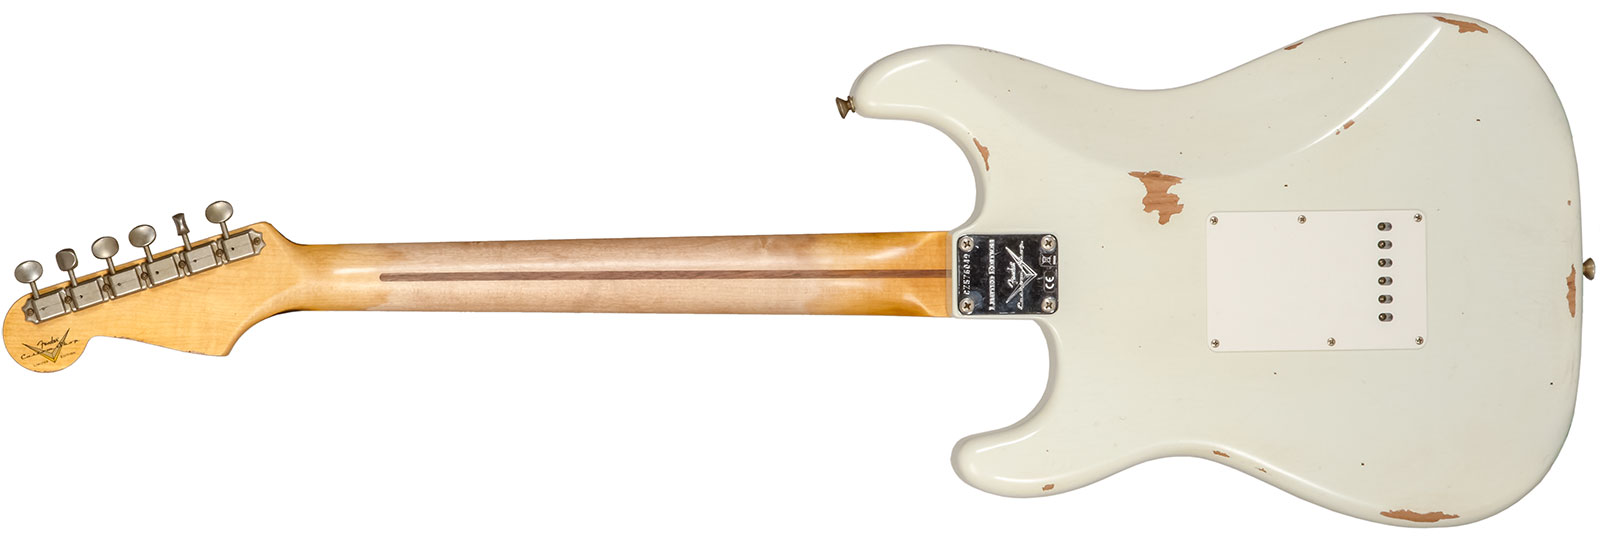 Fender Custom Shop Strat Fat 50's 3s Trem Mn #cz570495 - Relic India Ivory - Guitare Électrique Forme Str - Variation 1